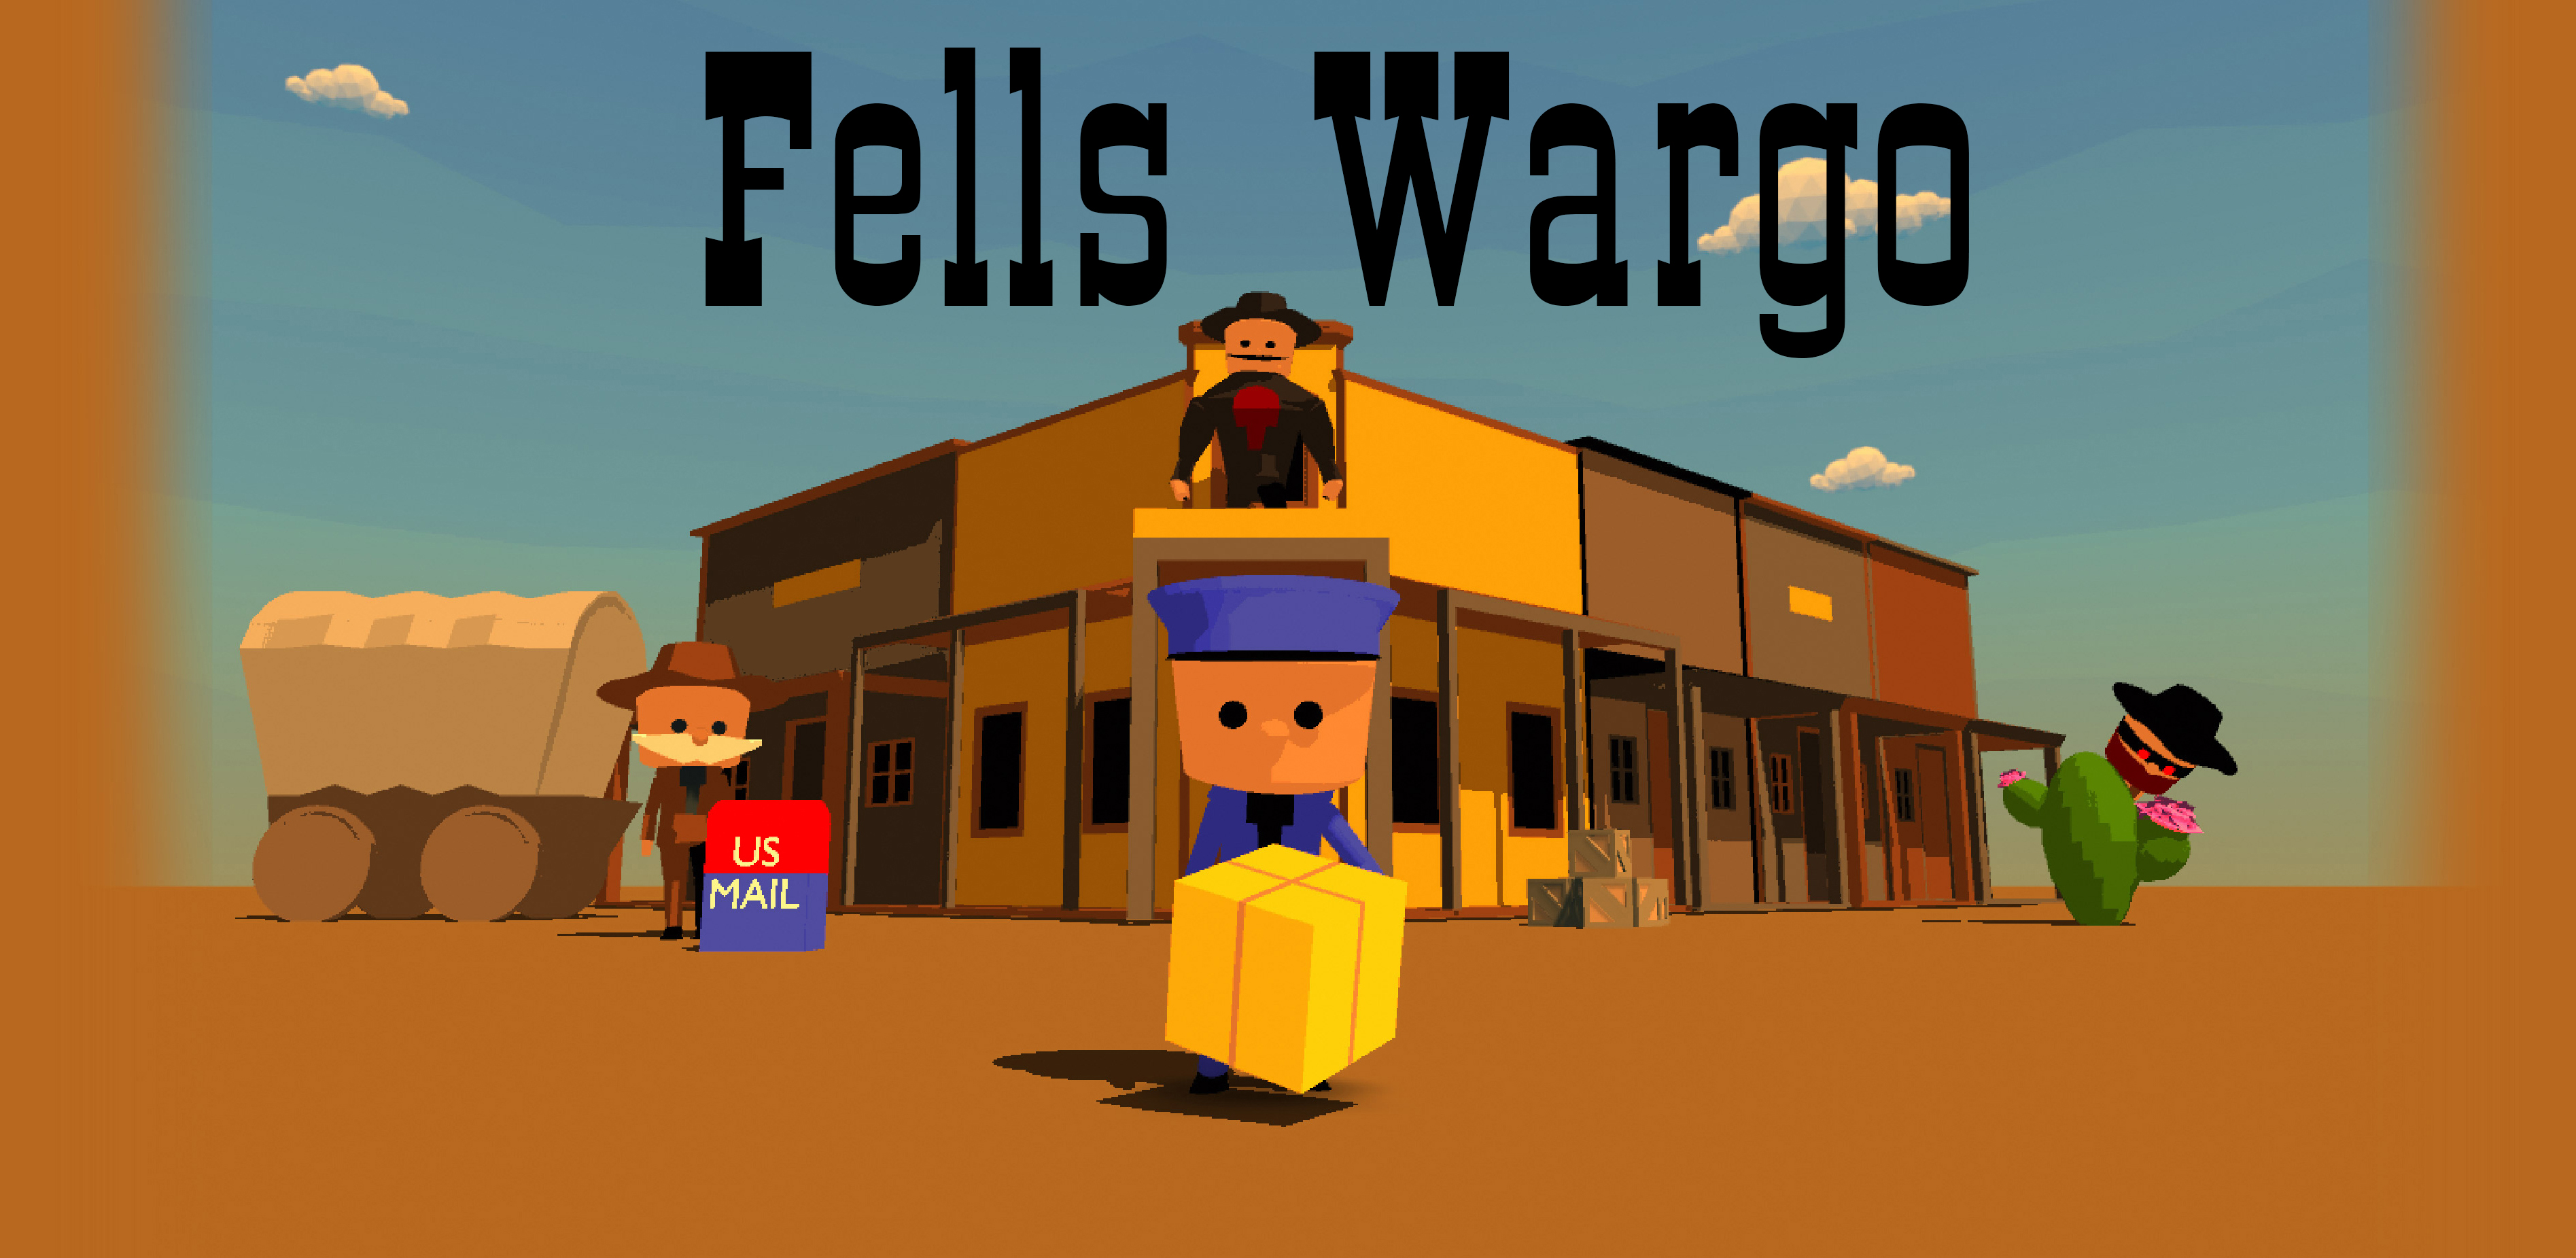 Fells Wargo